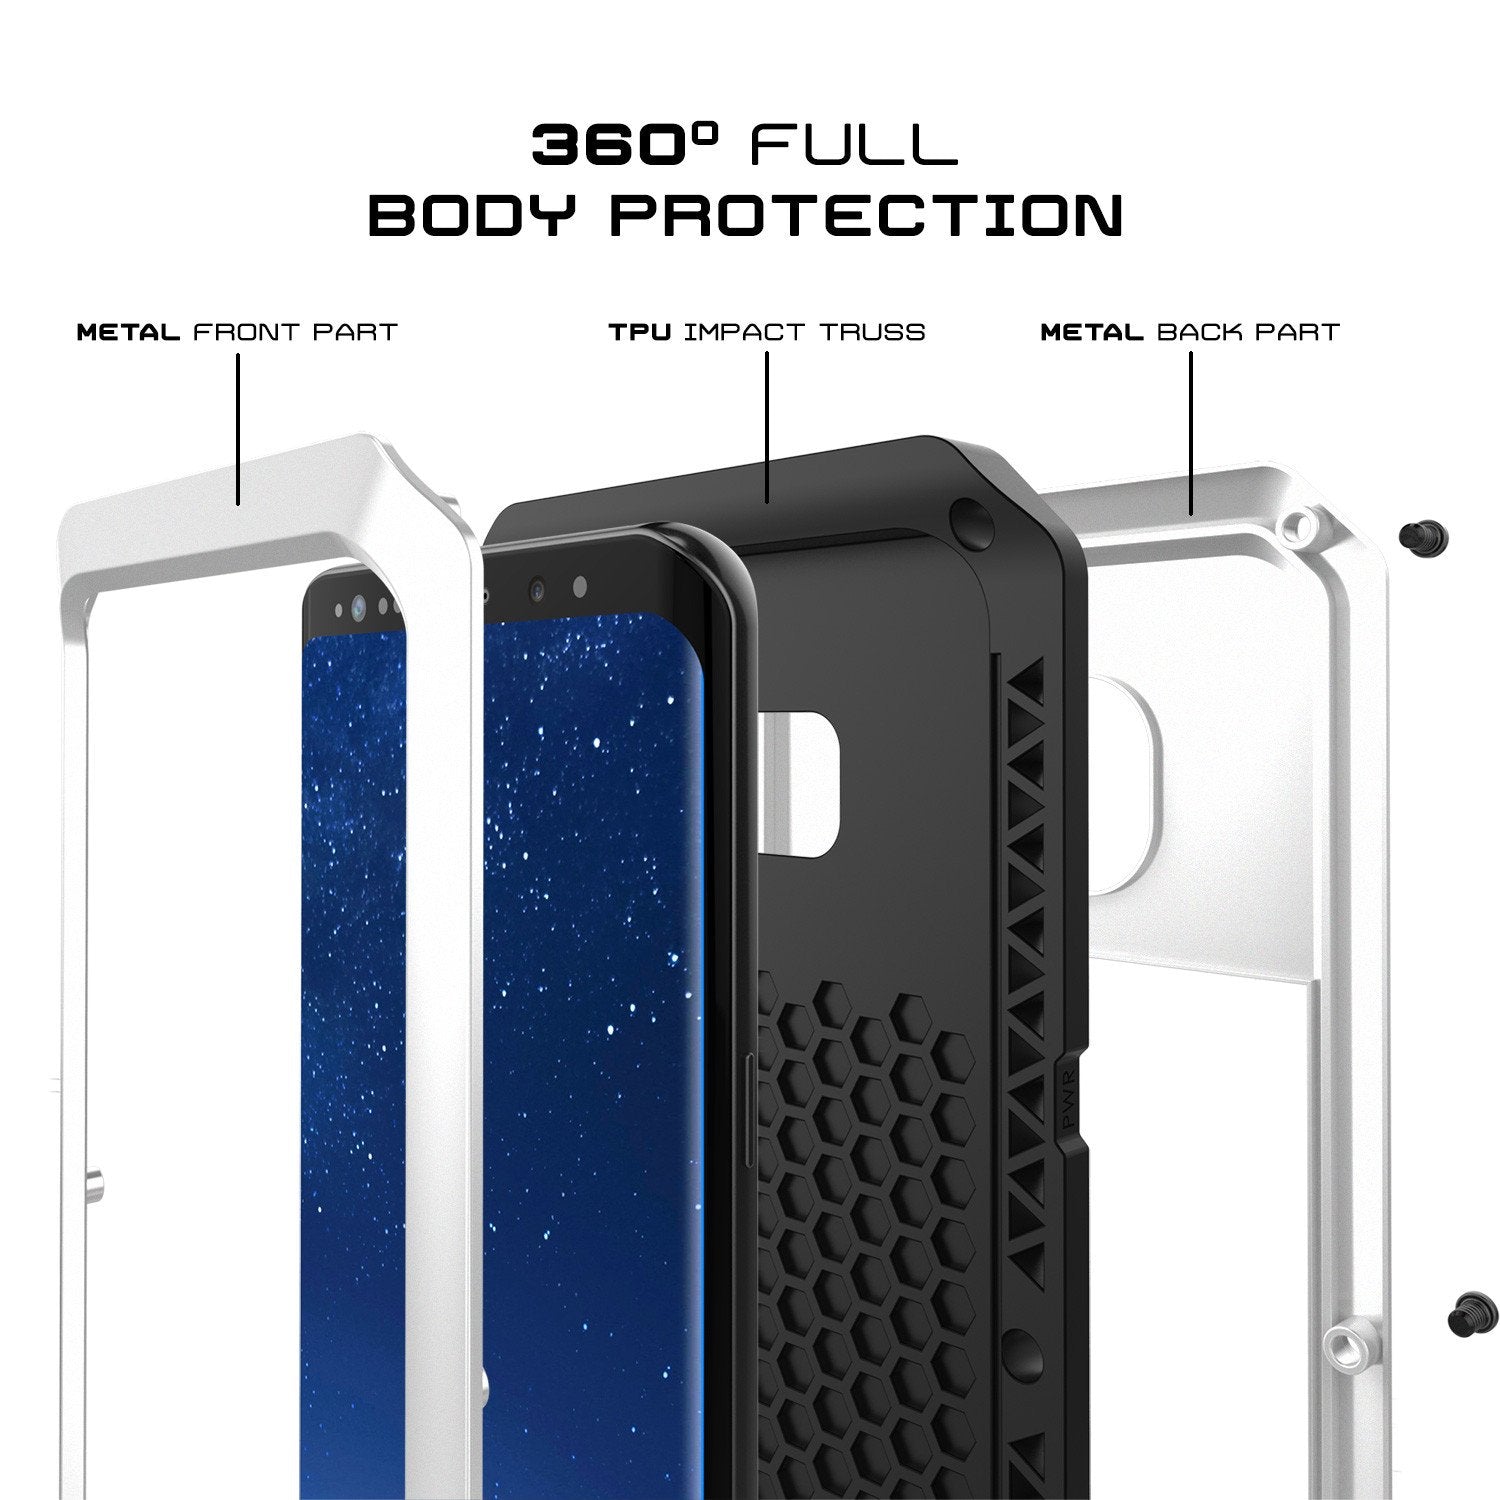 Galaxy S8+ Plus  Case, PUNKcase Metallic White Shockproof  Slim Metal Armor Case [White] - PunkCase NZ